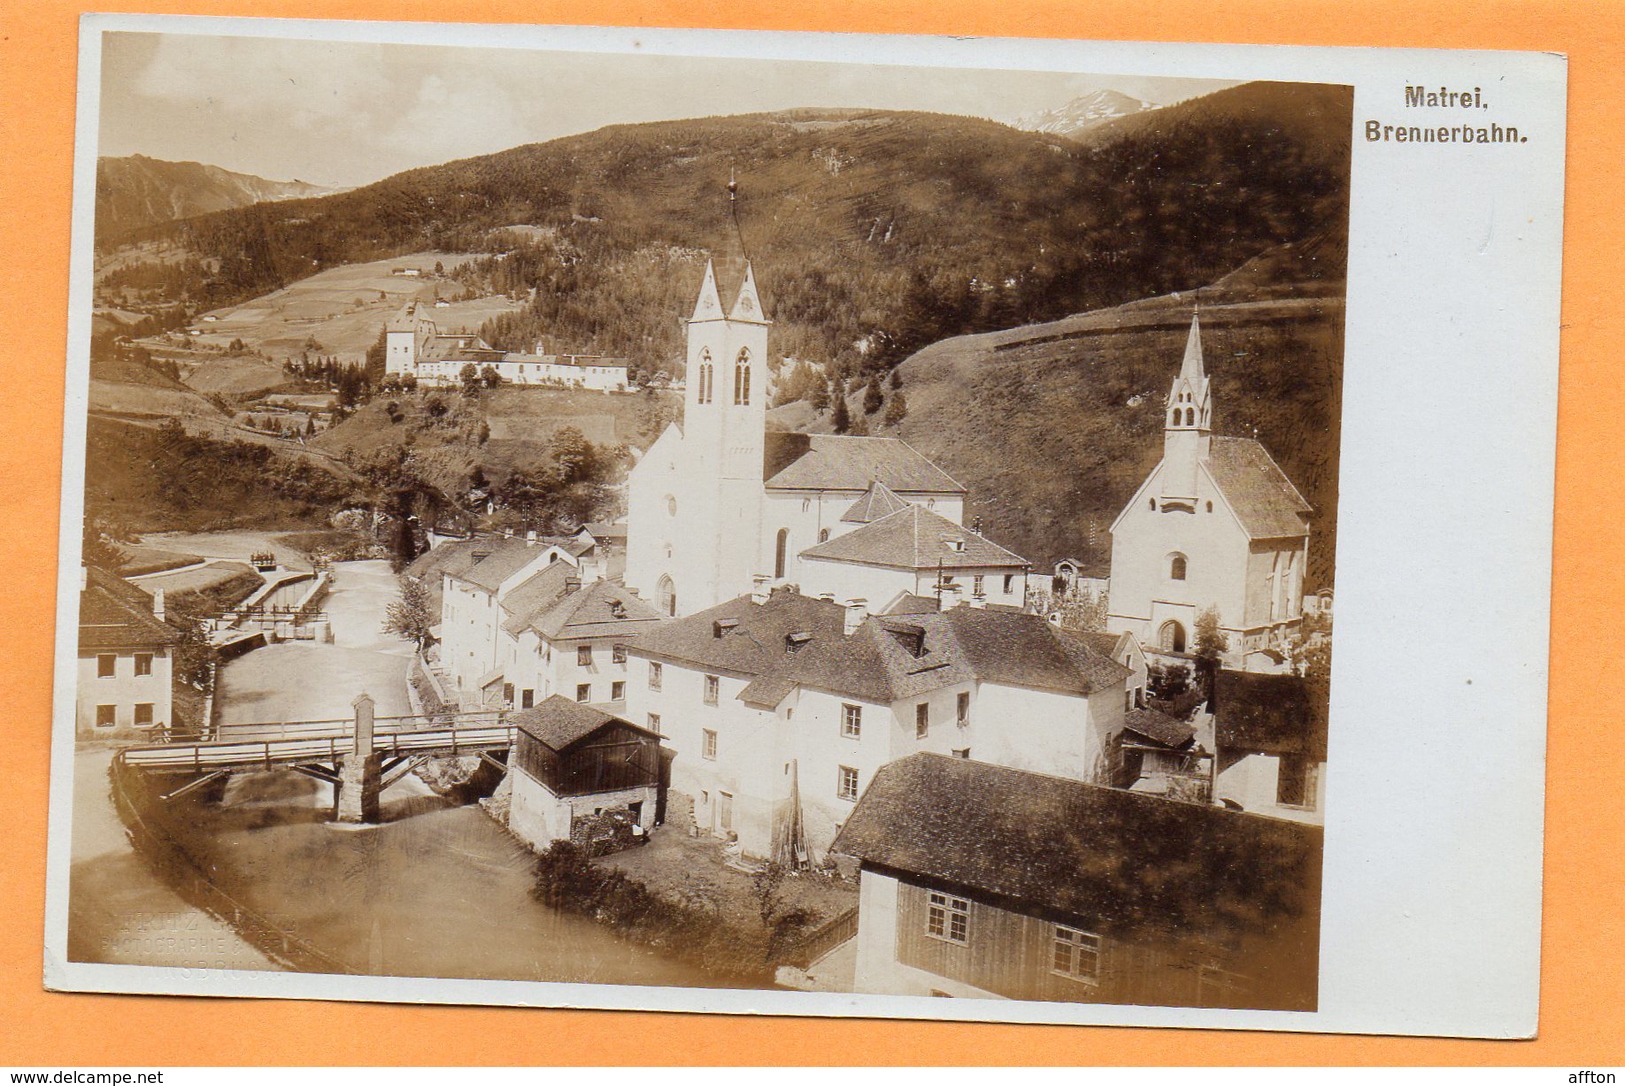 Matrei Austria 1905 Real Photo Postcard - Matrei Am Brenner